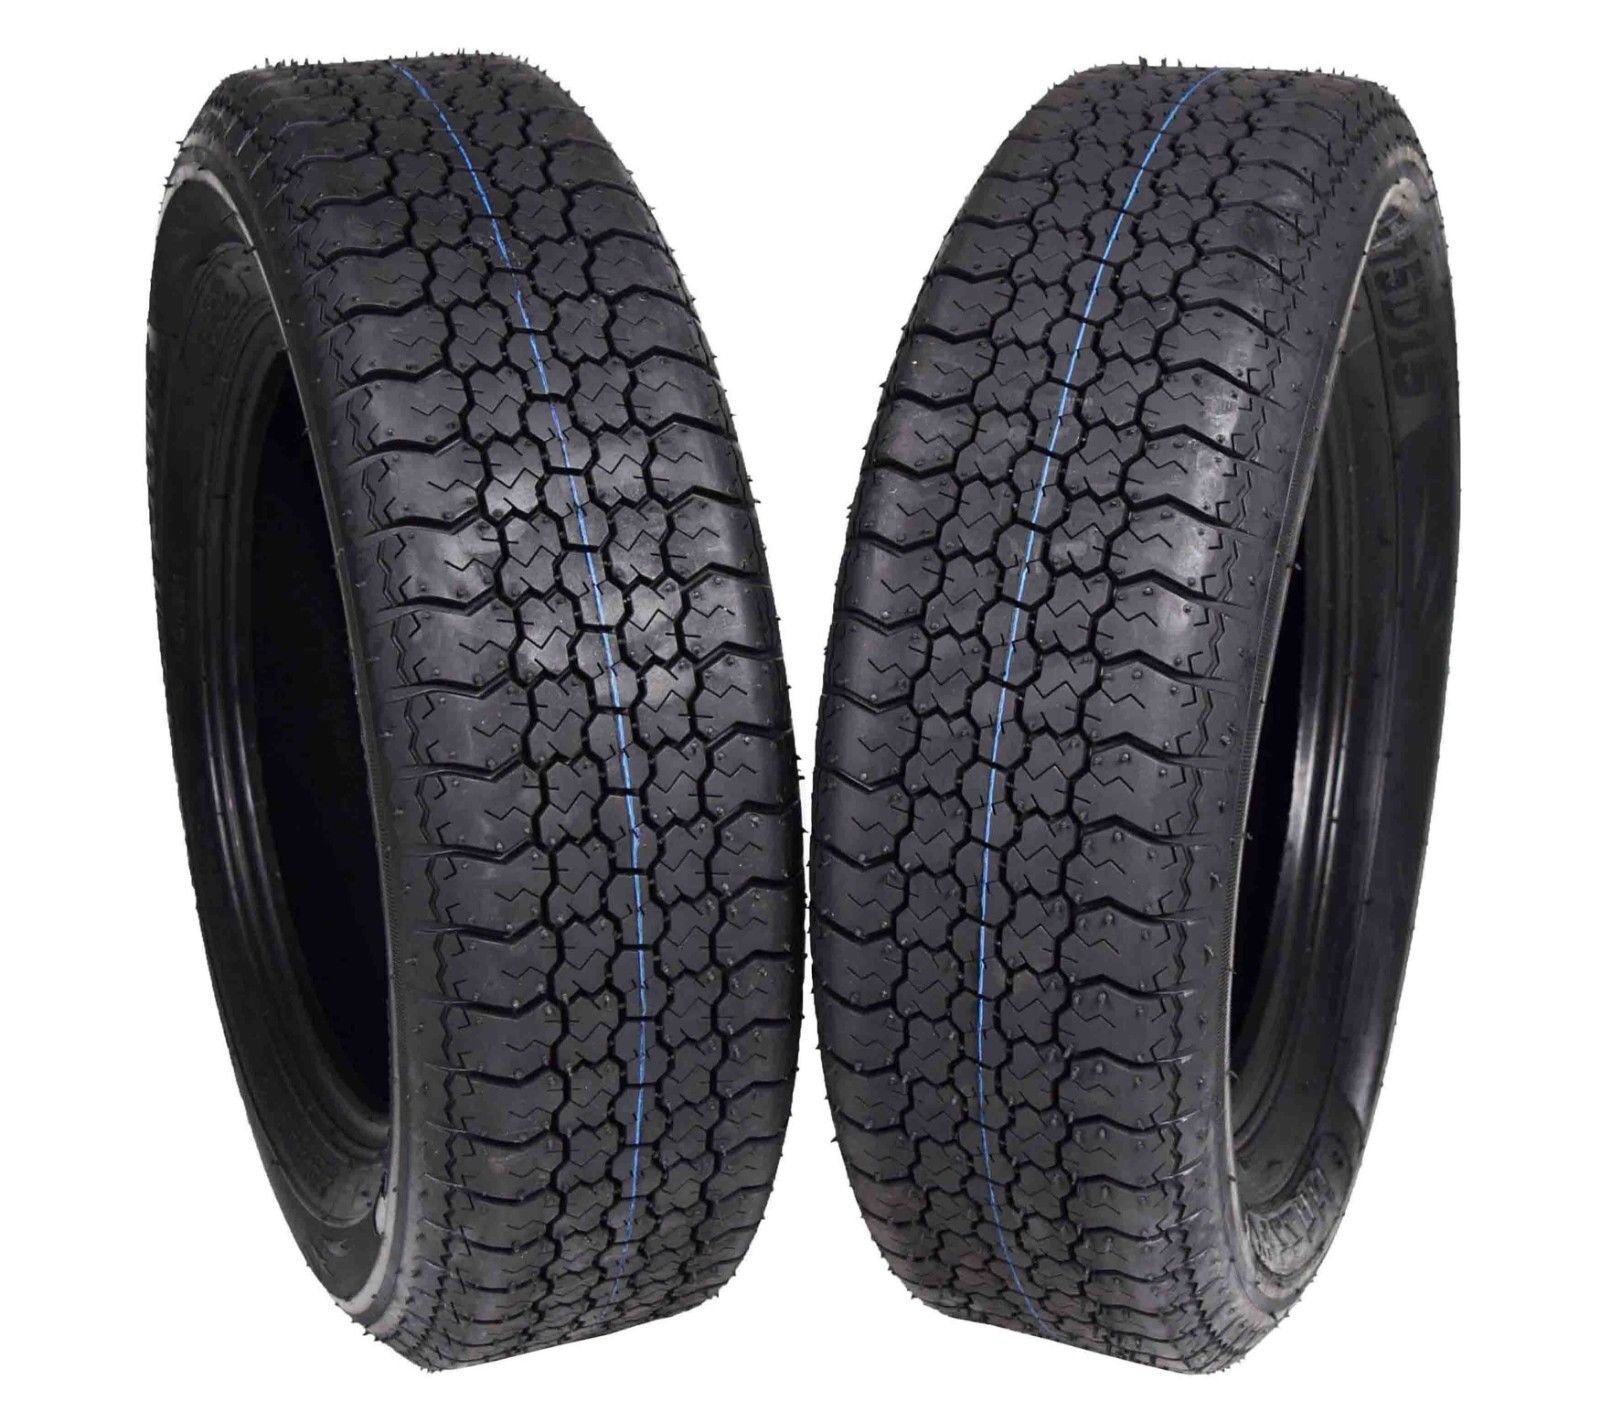 MASSFX 205/75-15 ST205/75D15 Bias 6 Ply Trailer Tire Single Tire (2 Pack)